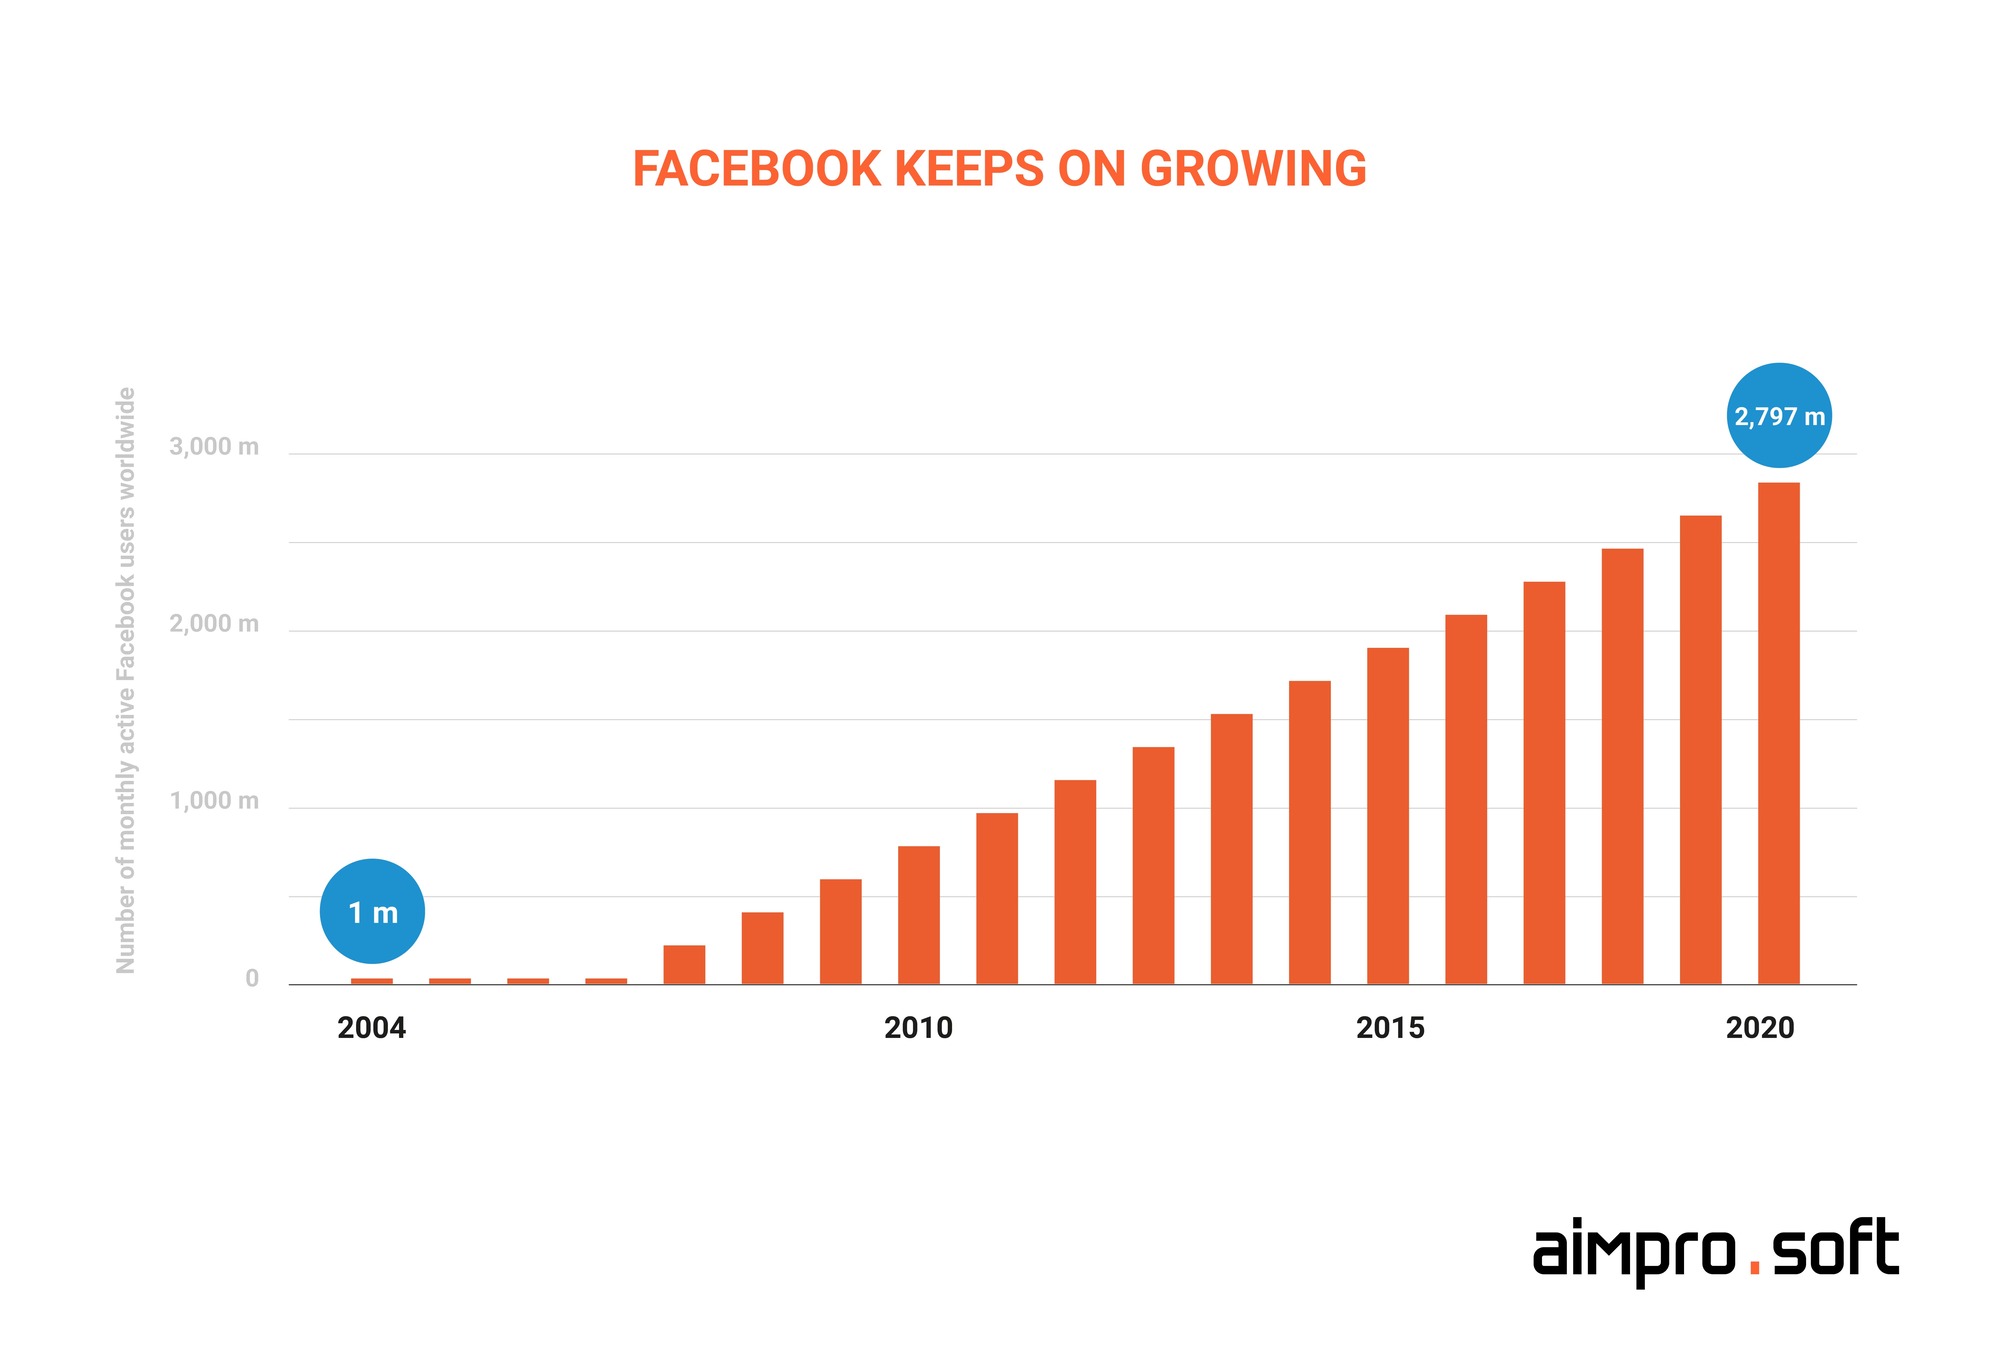 Reasons to start the development of a Facebook-like social media platform